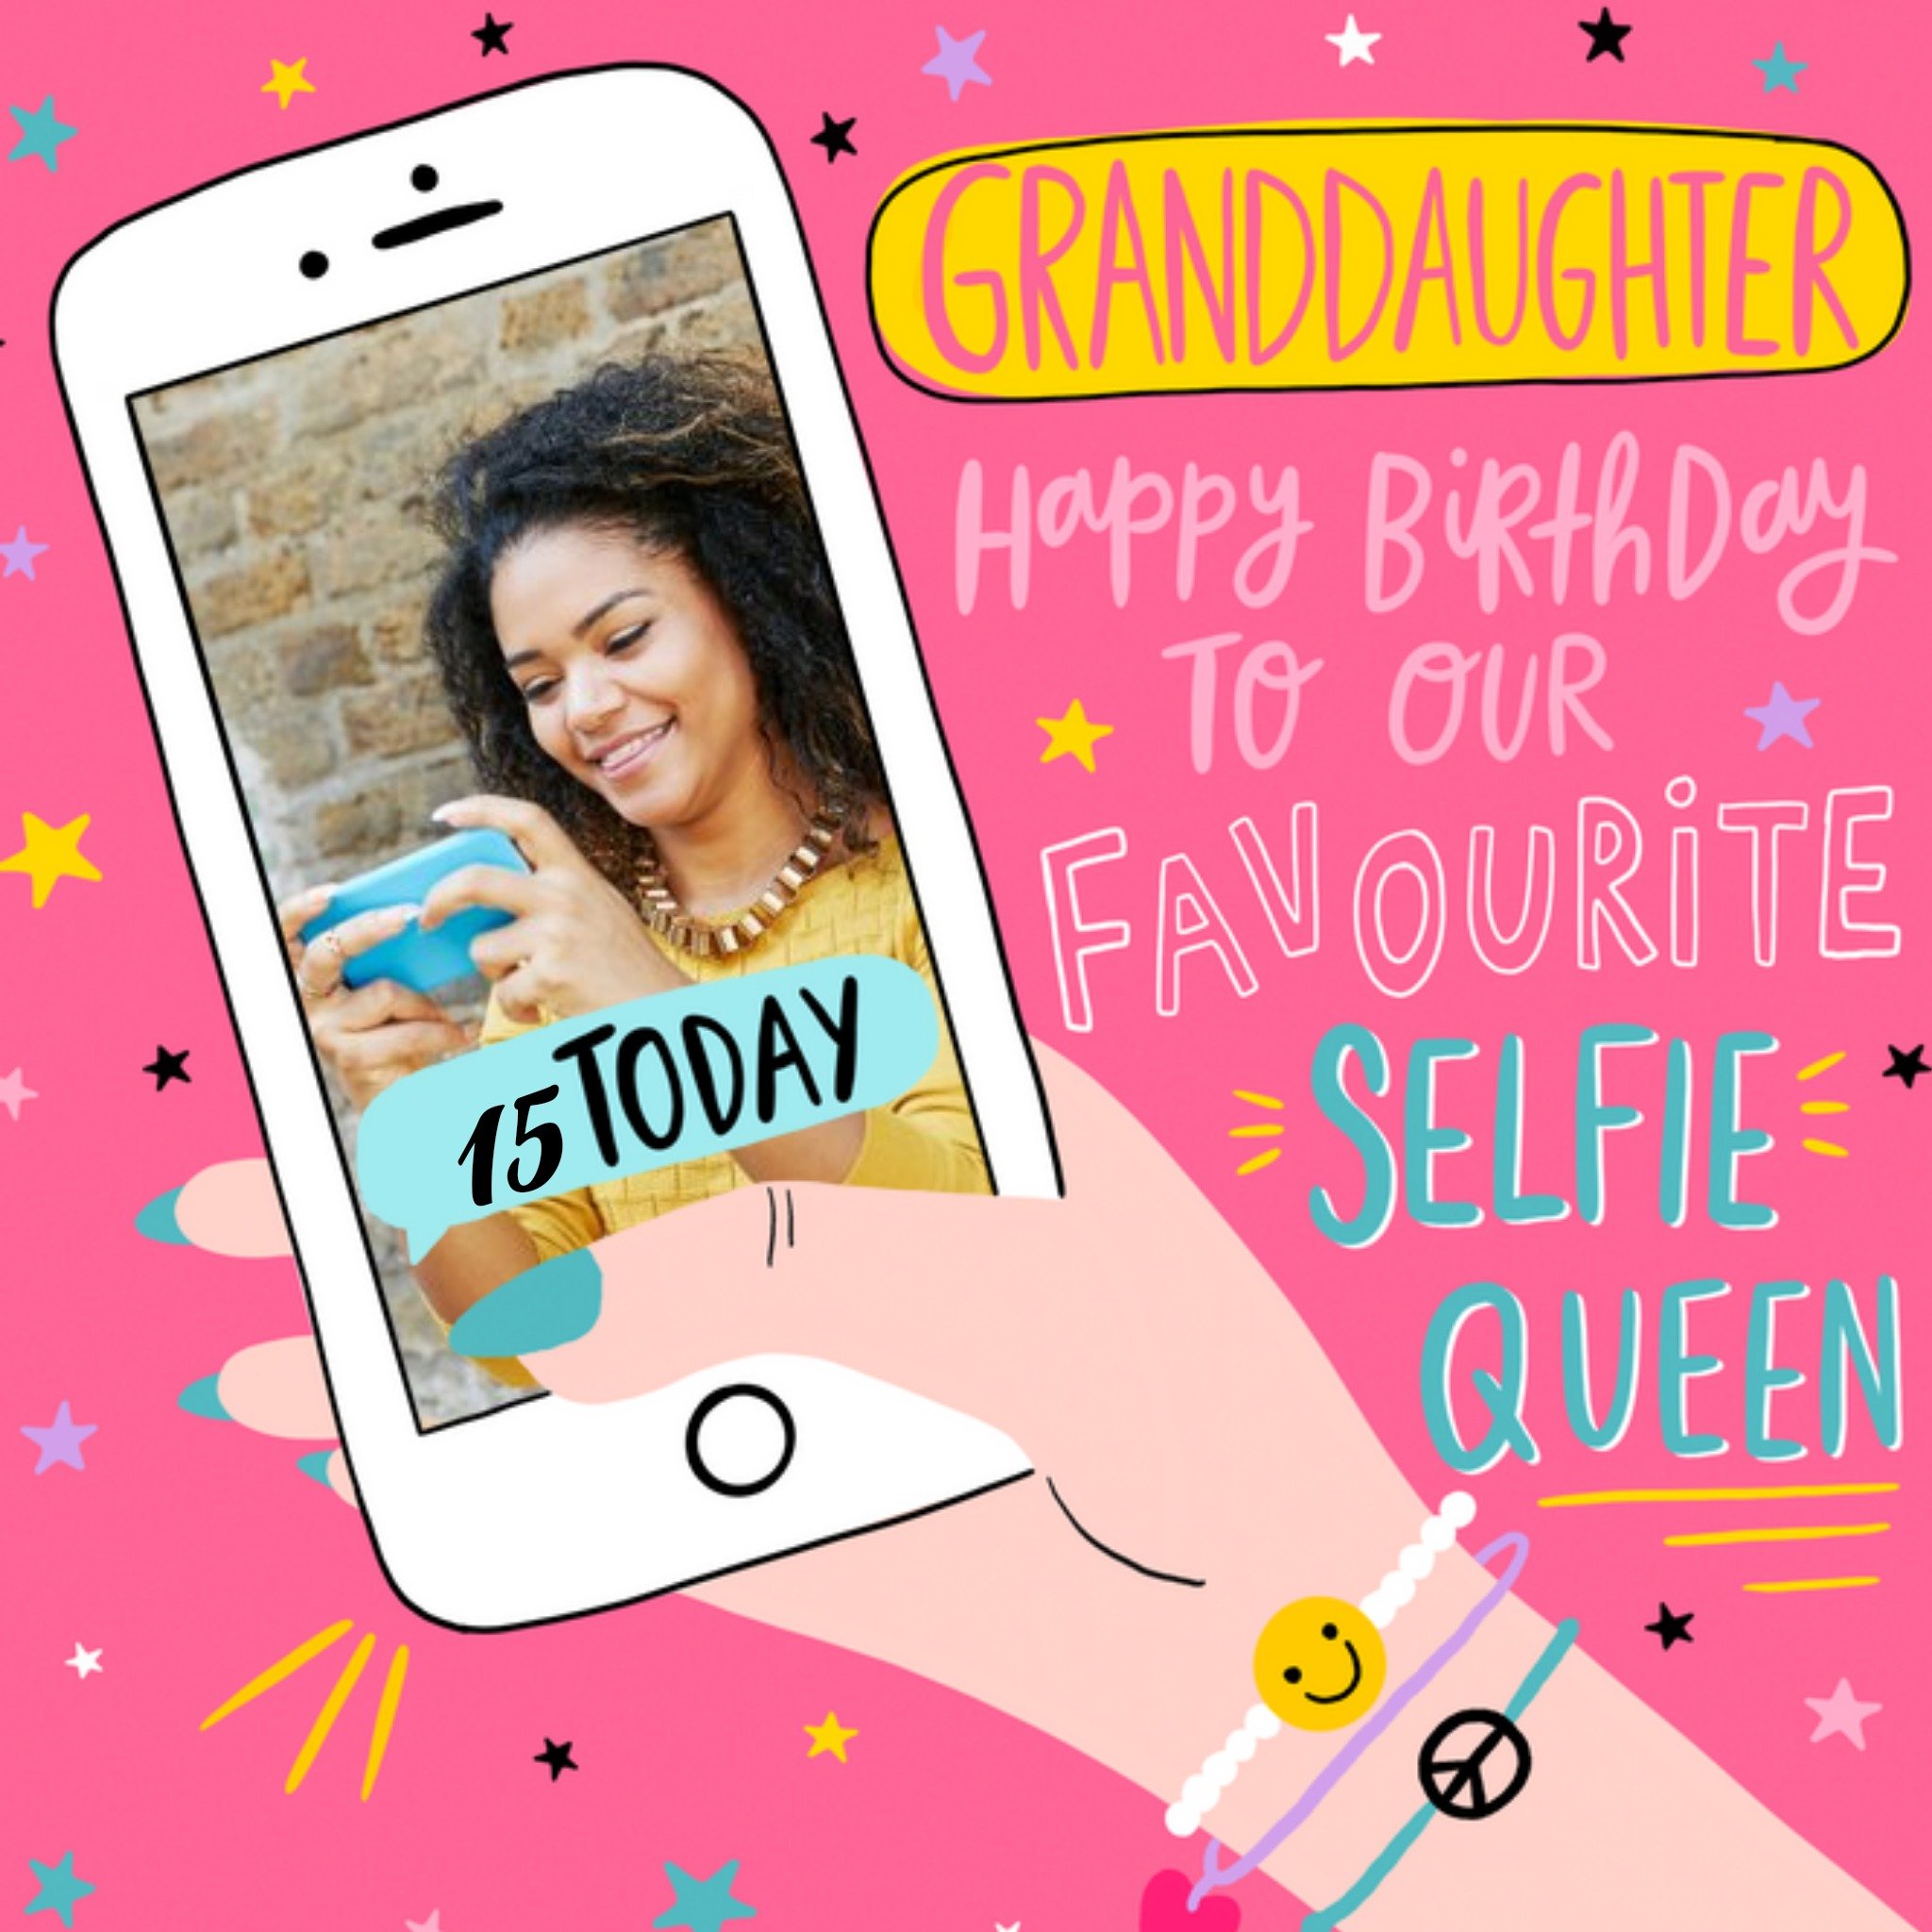 Moonpig Granddaughter Happy Birthday Favourite Selfie Queen Photo Upload Card, Large